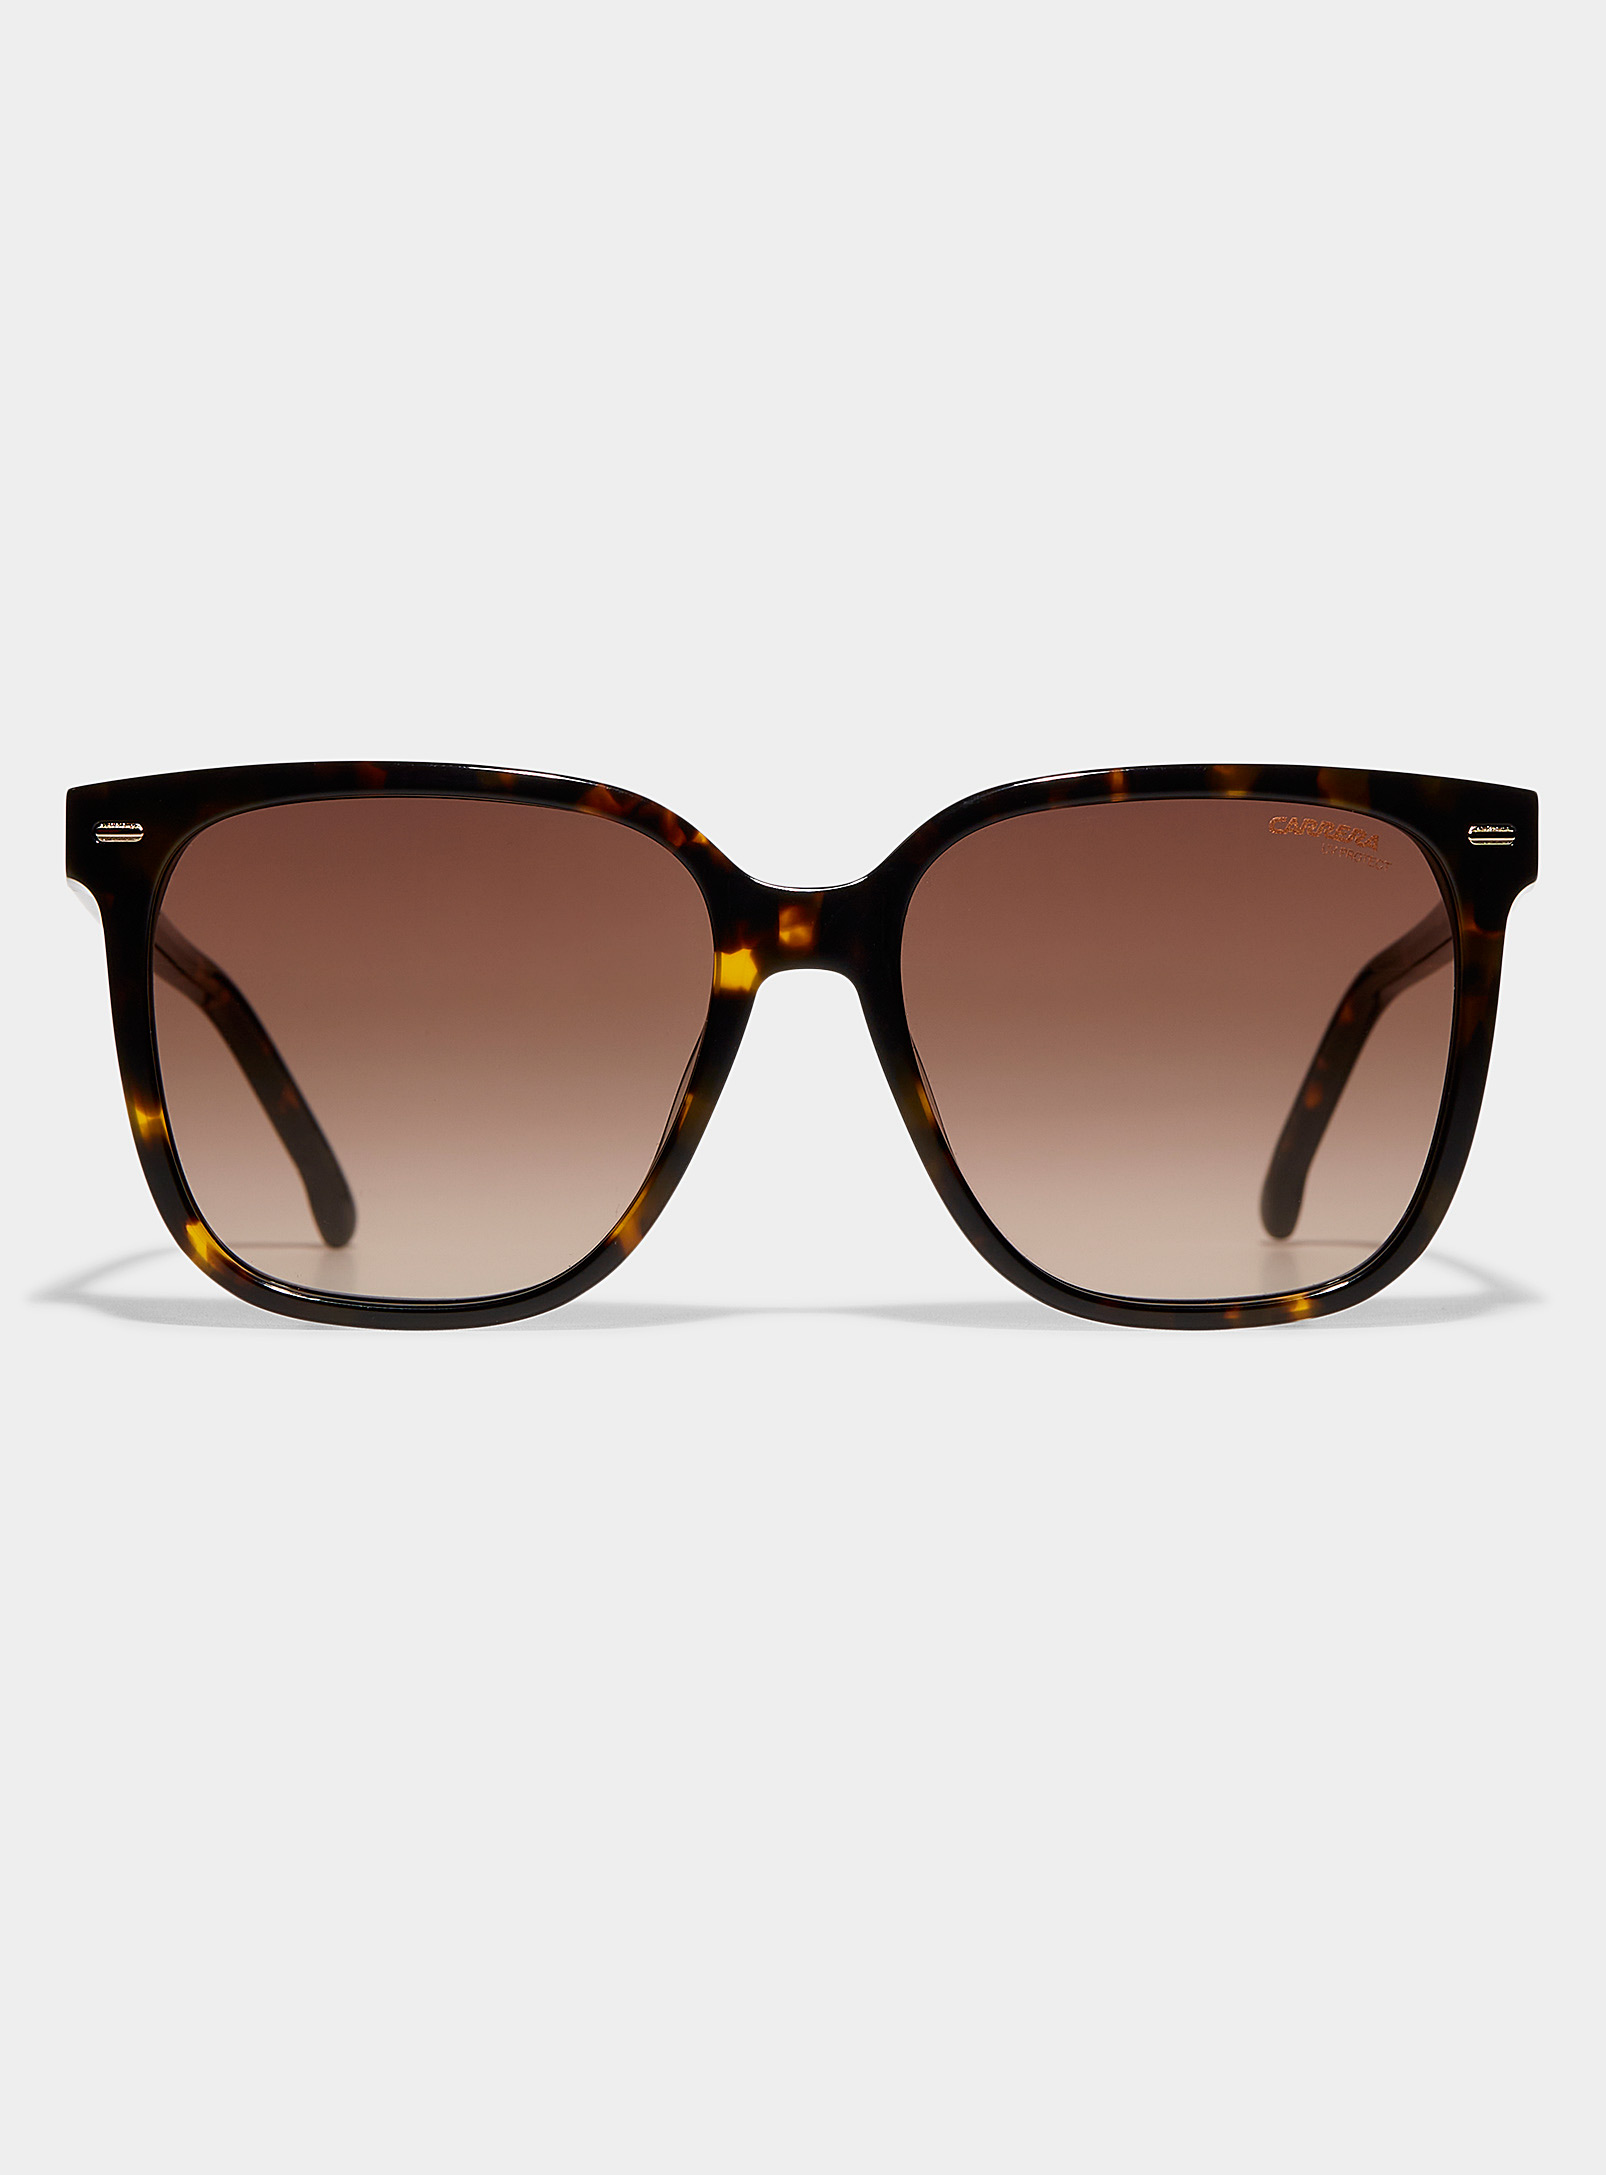 Carrera - Women's Golden-accent tortoiseshell sunglasses